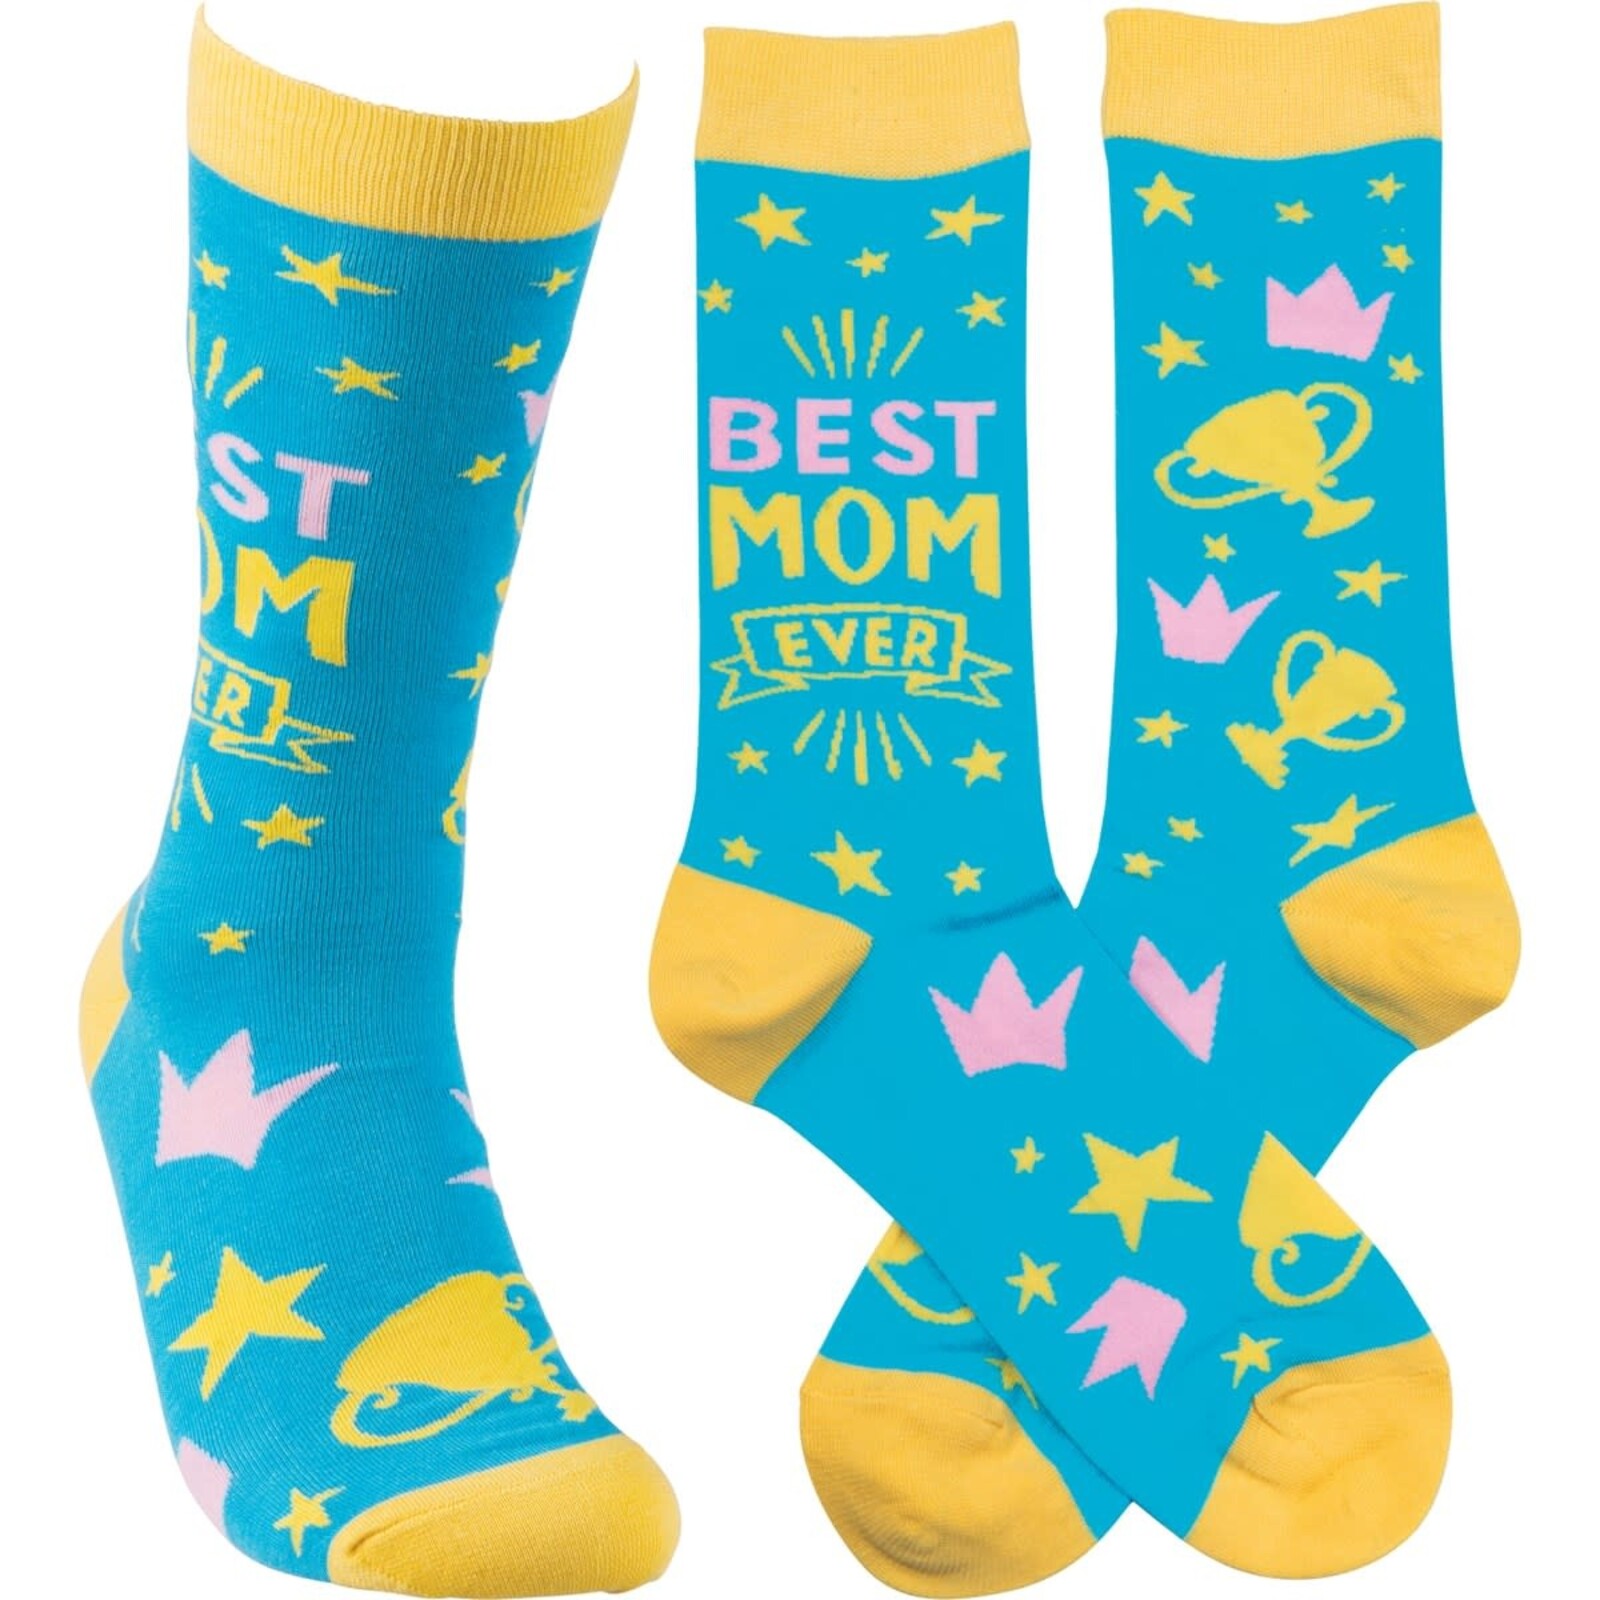 Primitives by Kathy Best Mom Ever Socks     34676 loading=